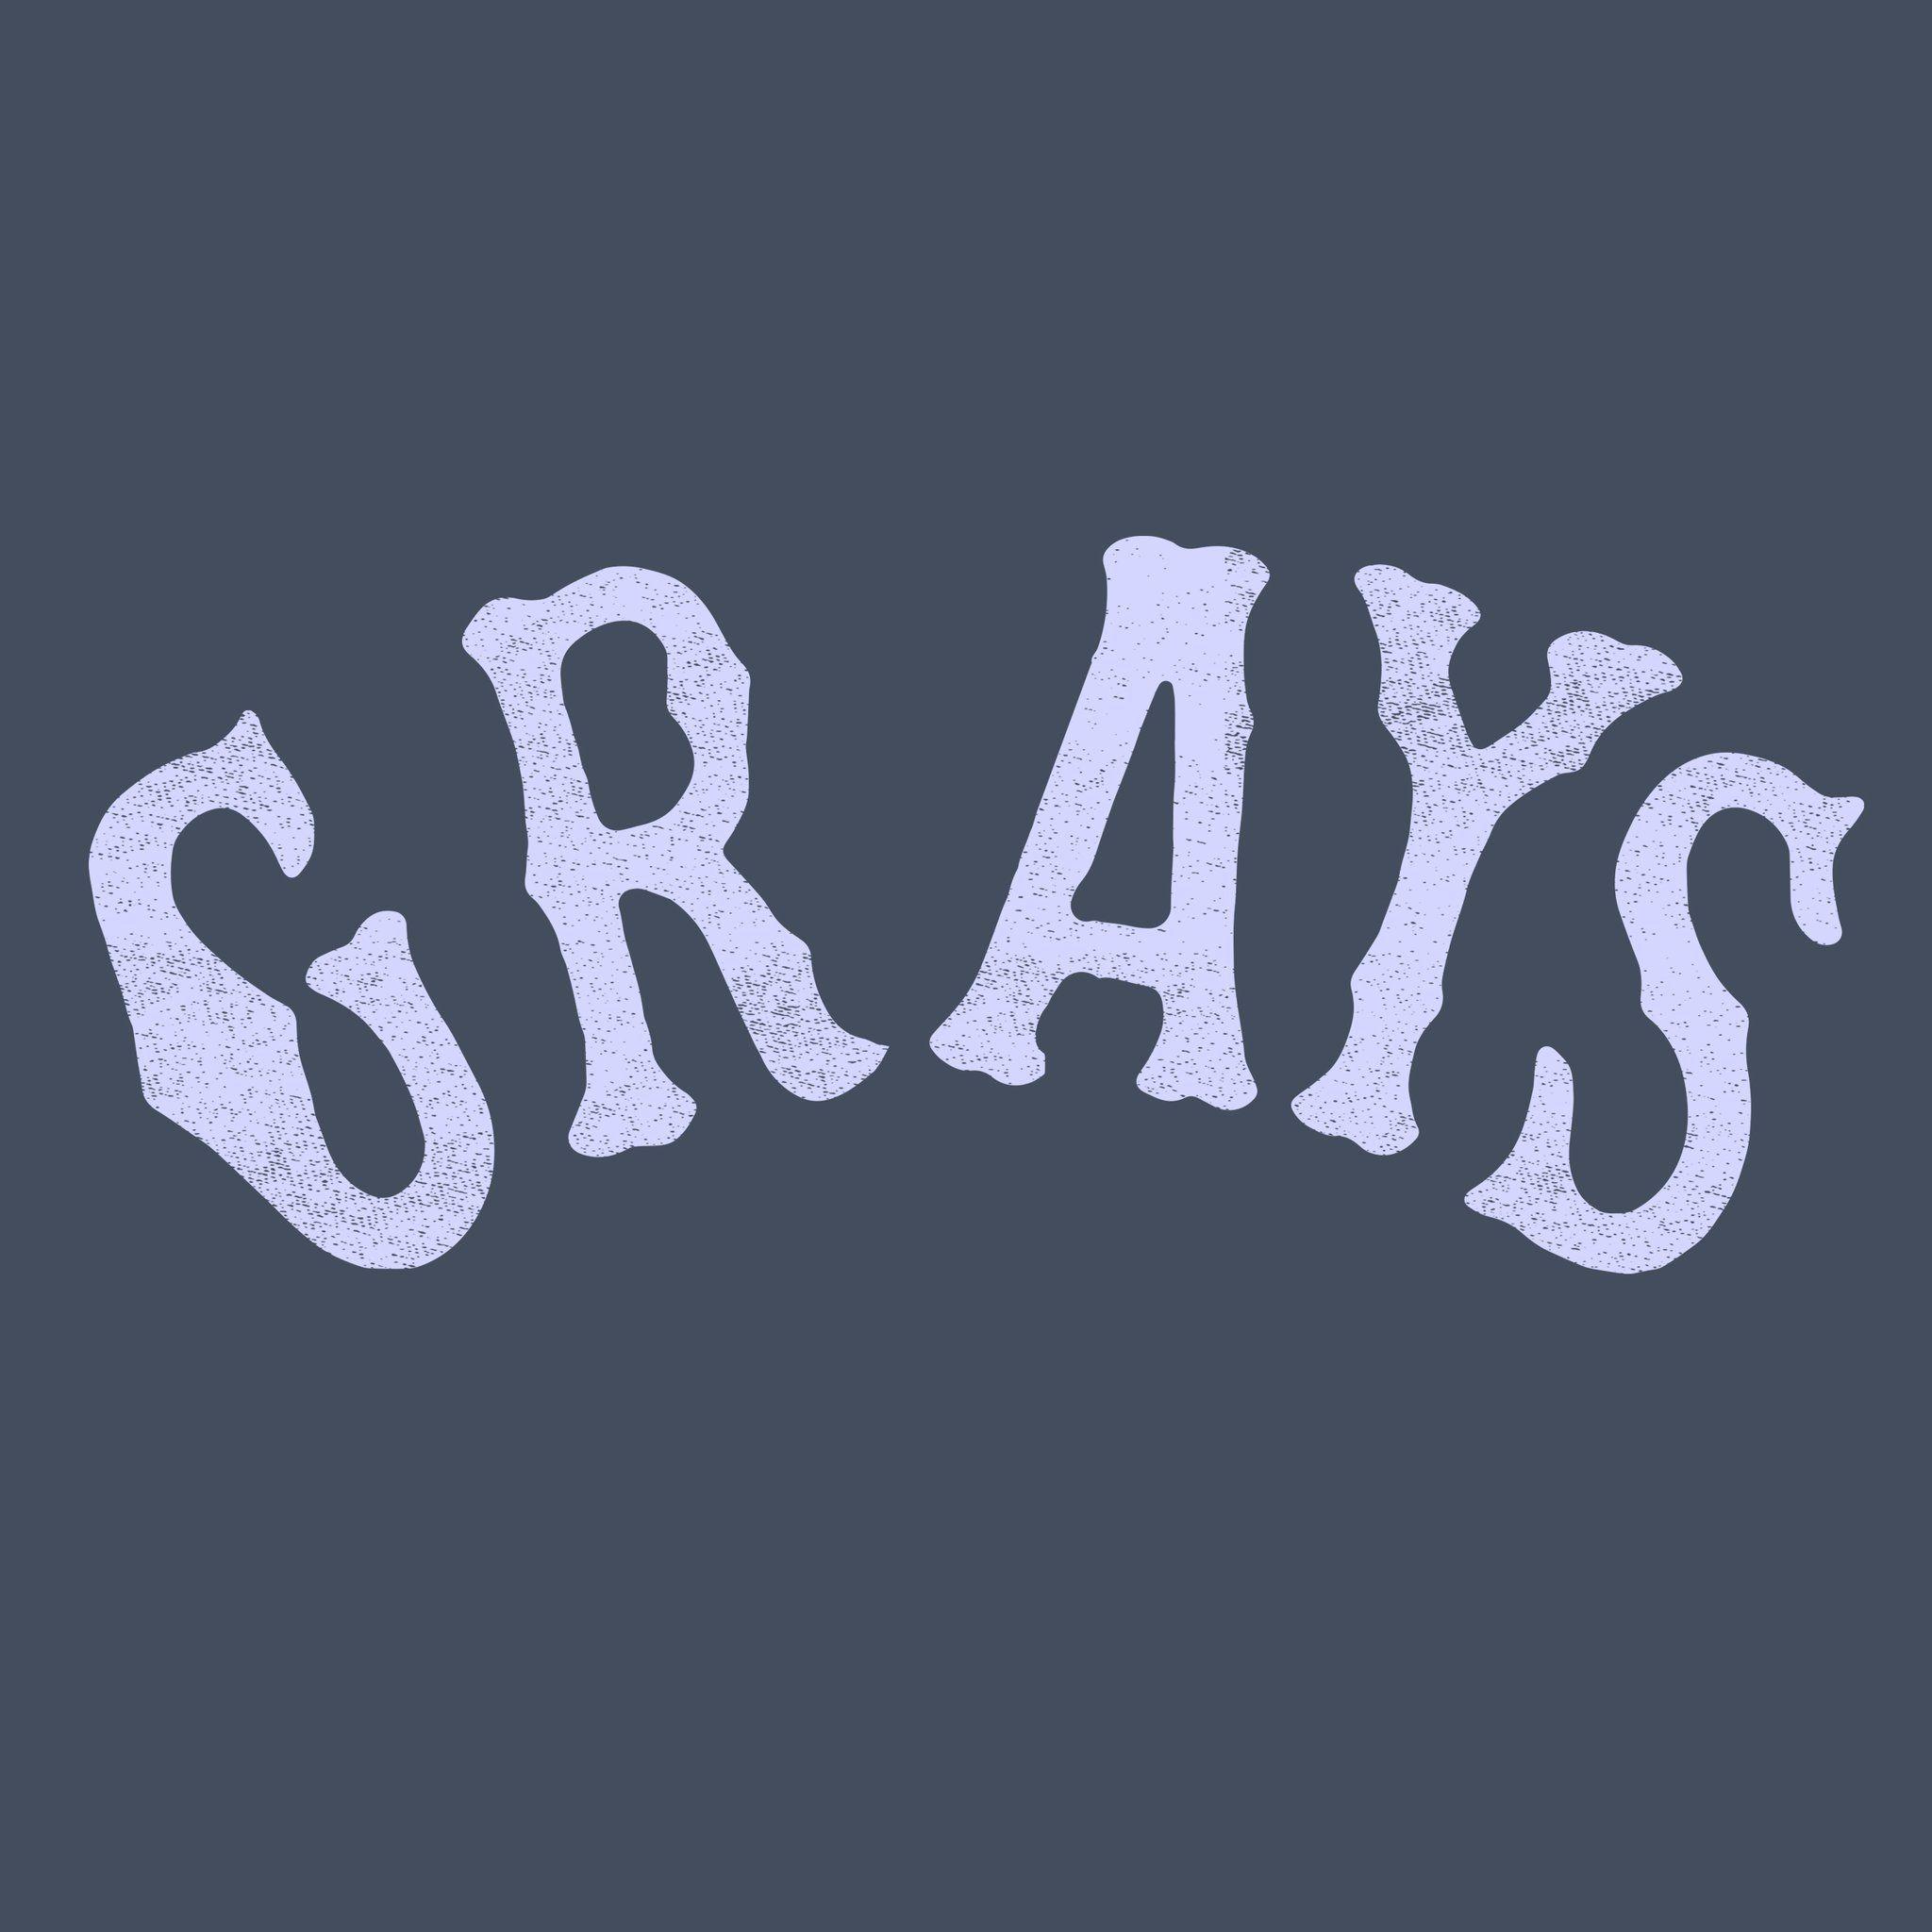 Grays Baseball Logo - Homestead Grays Baseball. Vintage Sports Apparel. Old School